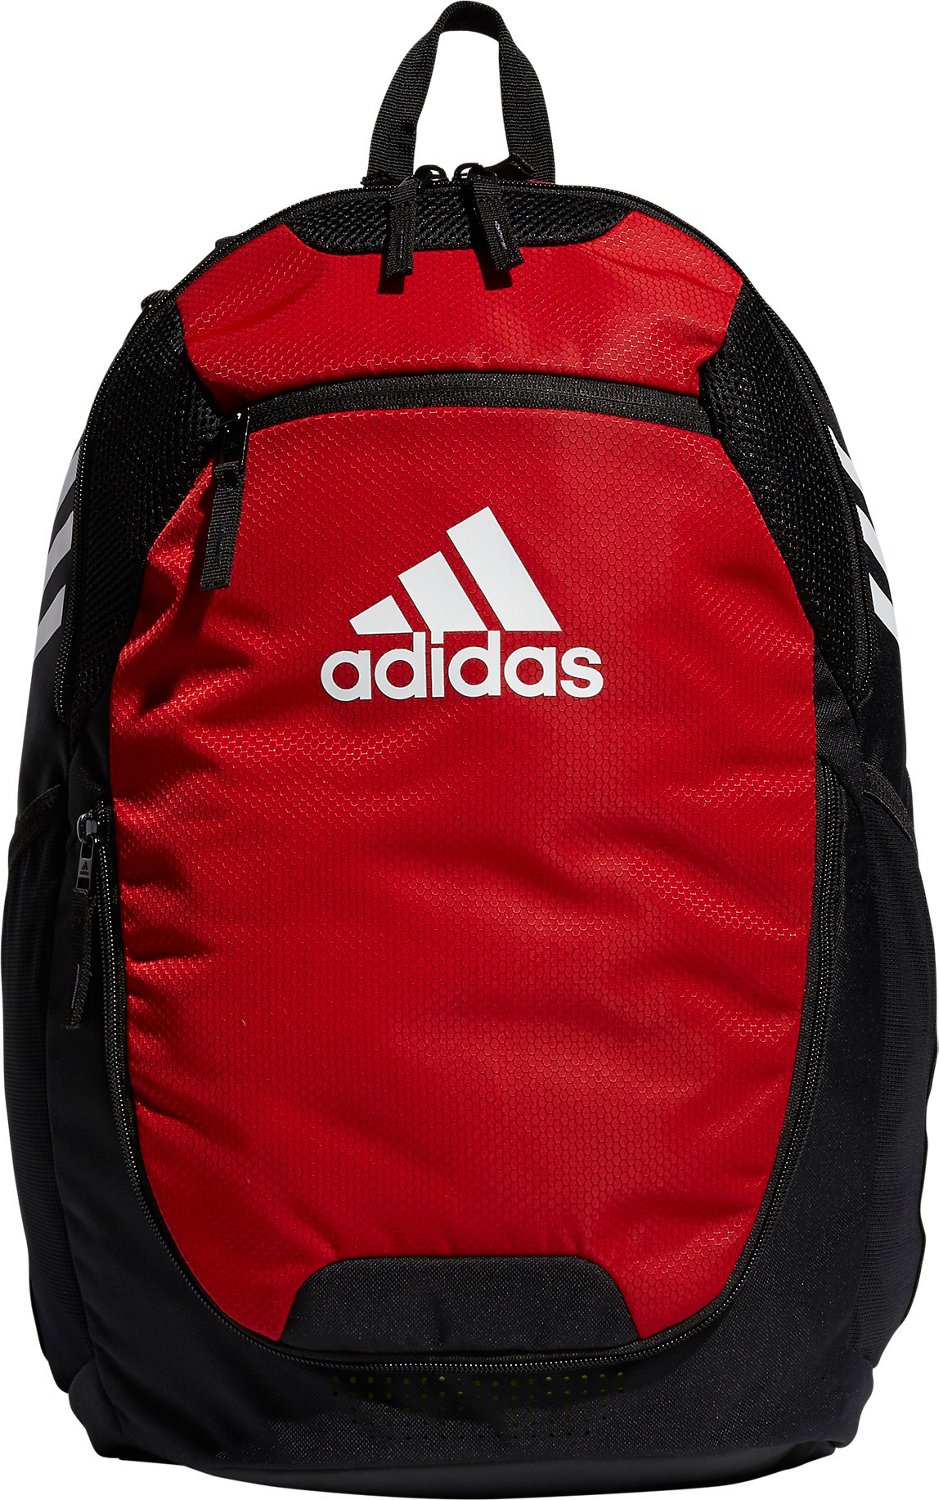 adidas Stadium Soccer Backpack